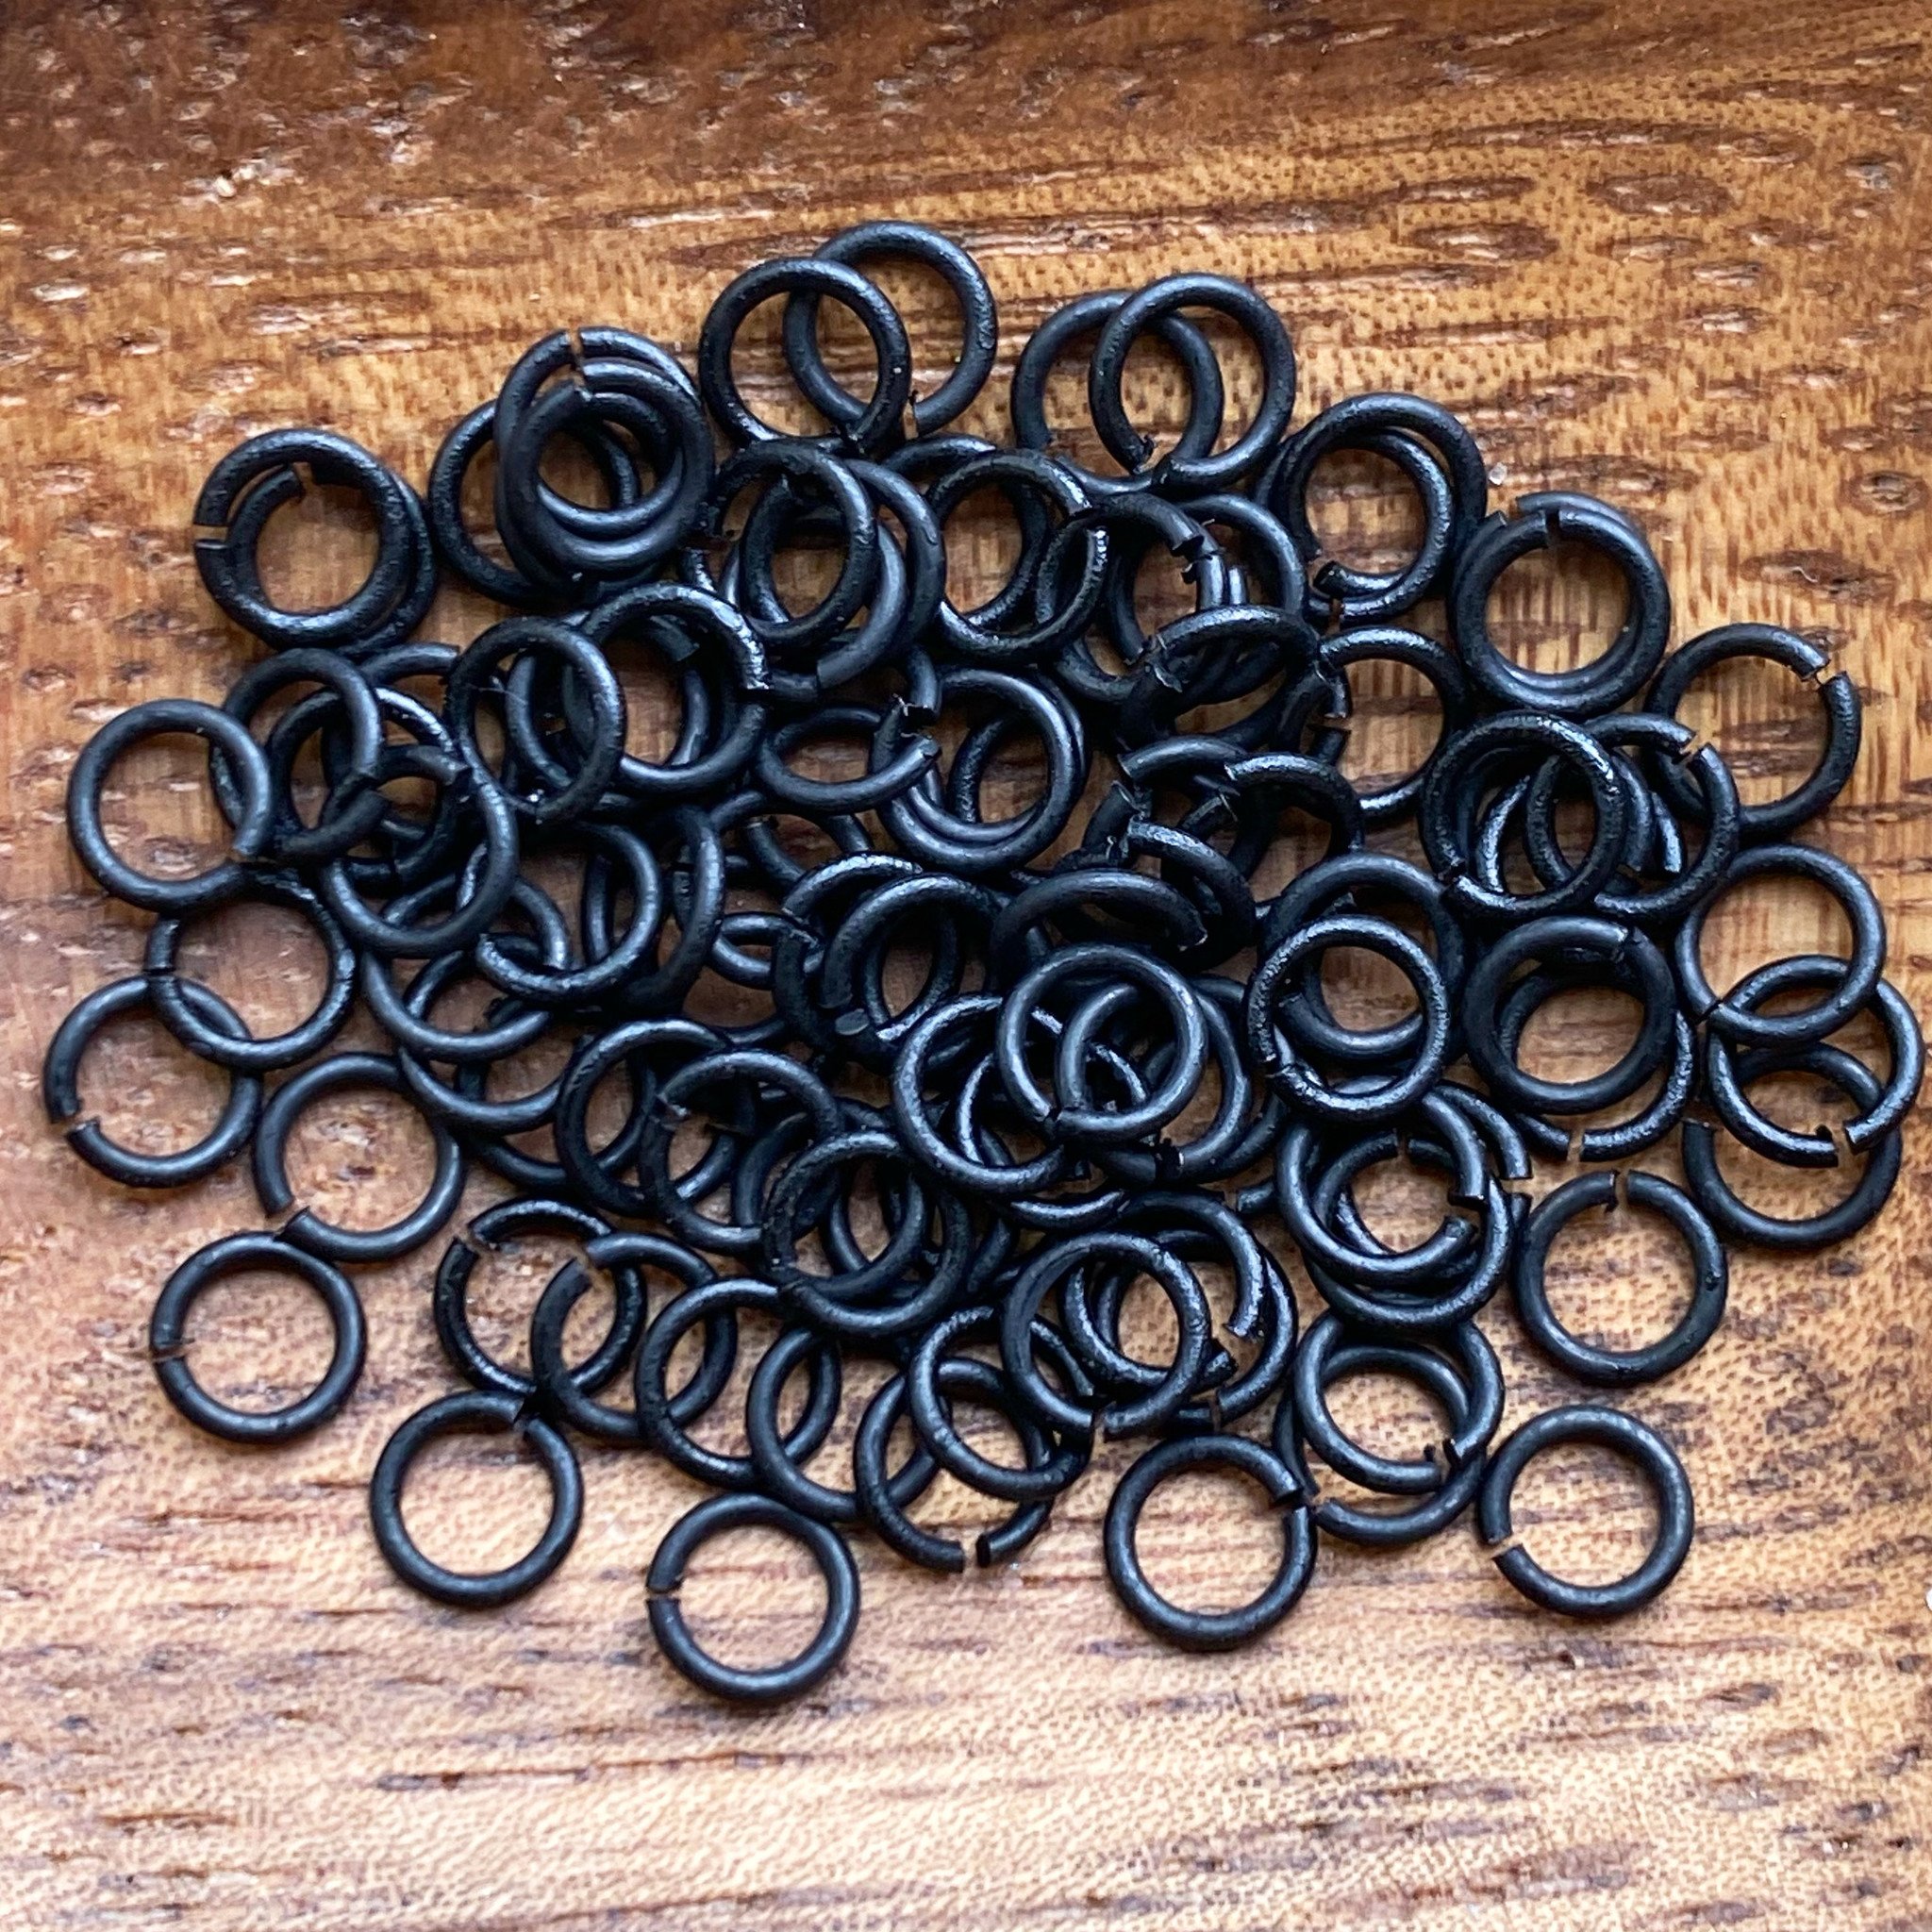 100 Pcs Black Aluminum Open Jump Rings 10mm 18 Gauge 1mm Thick 